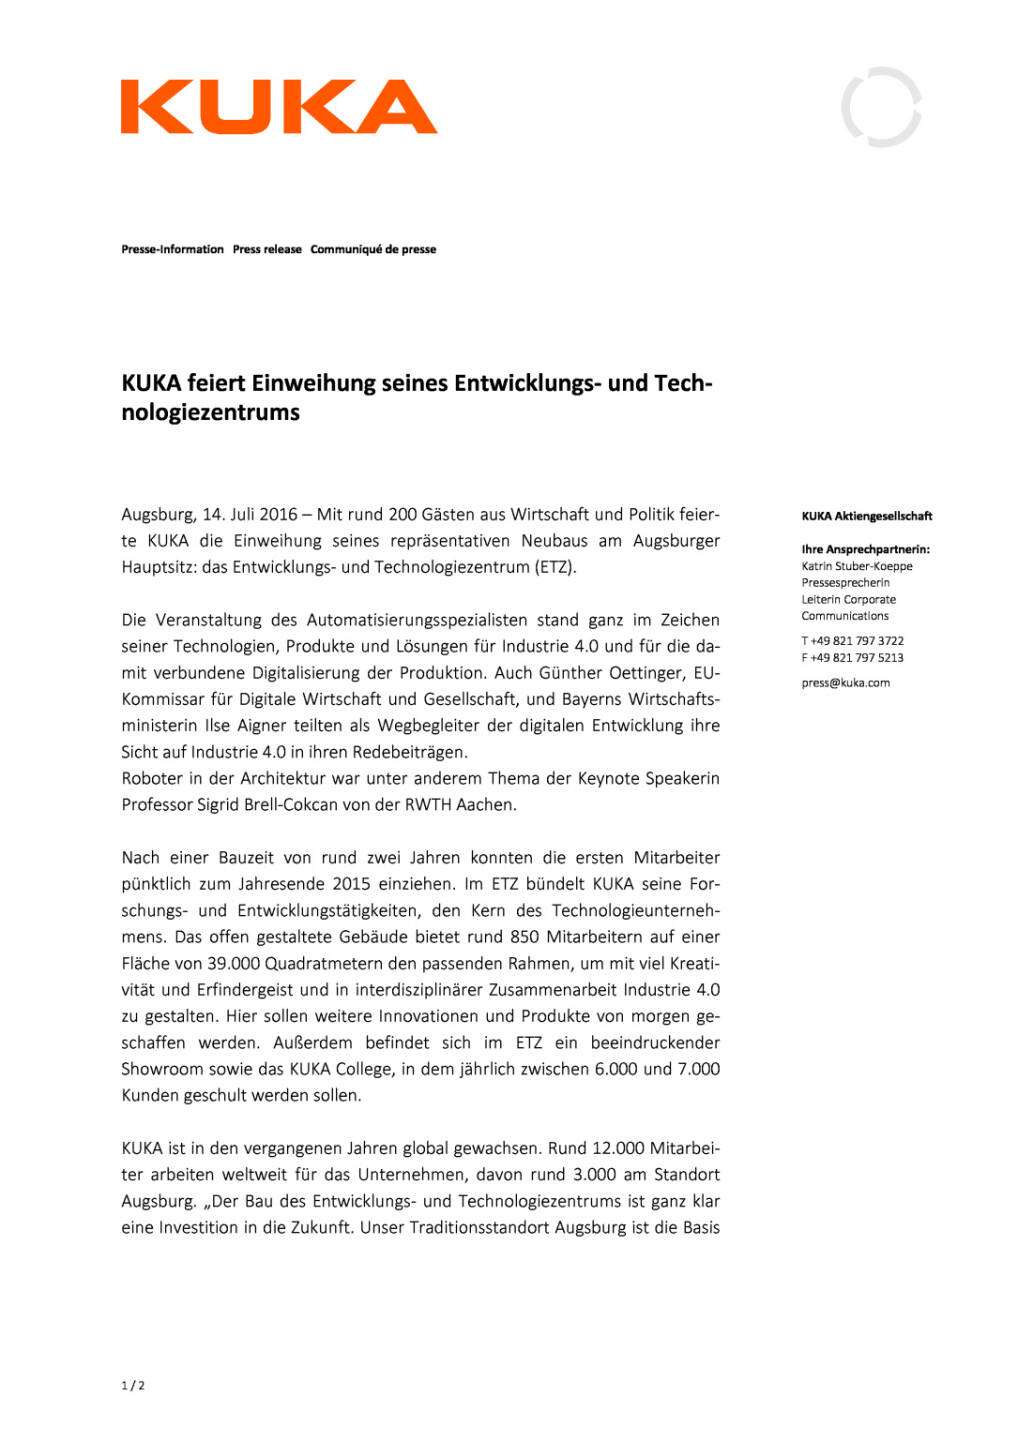 KUKA : Einweihung Entwicklungs- und Technologiezentrums, Seite 1/2, komplettes Dokument unter http://boerse-social.com/static/uploads/file_1417_kuka_einweihung_entwicklungs-_und_technologiezentrums.pdf